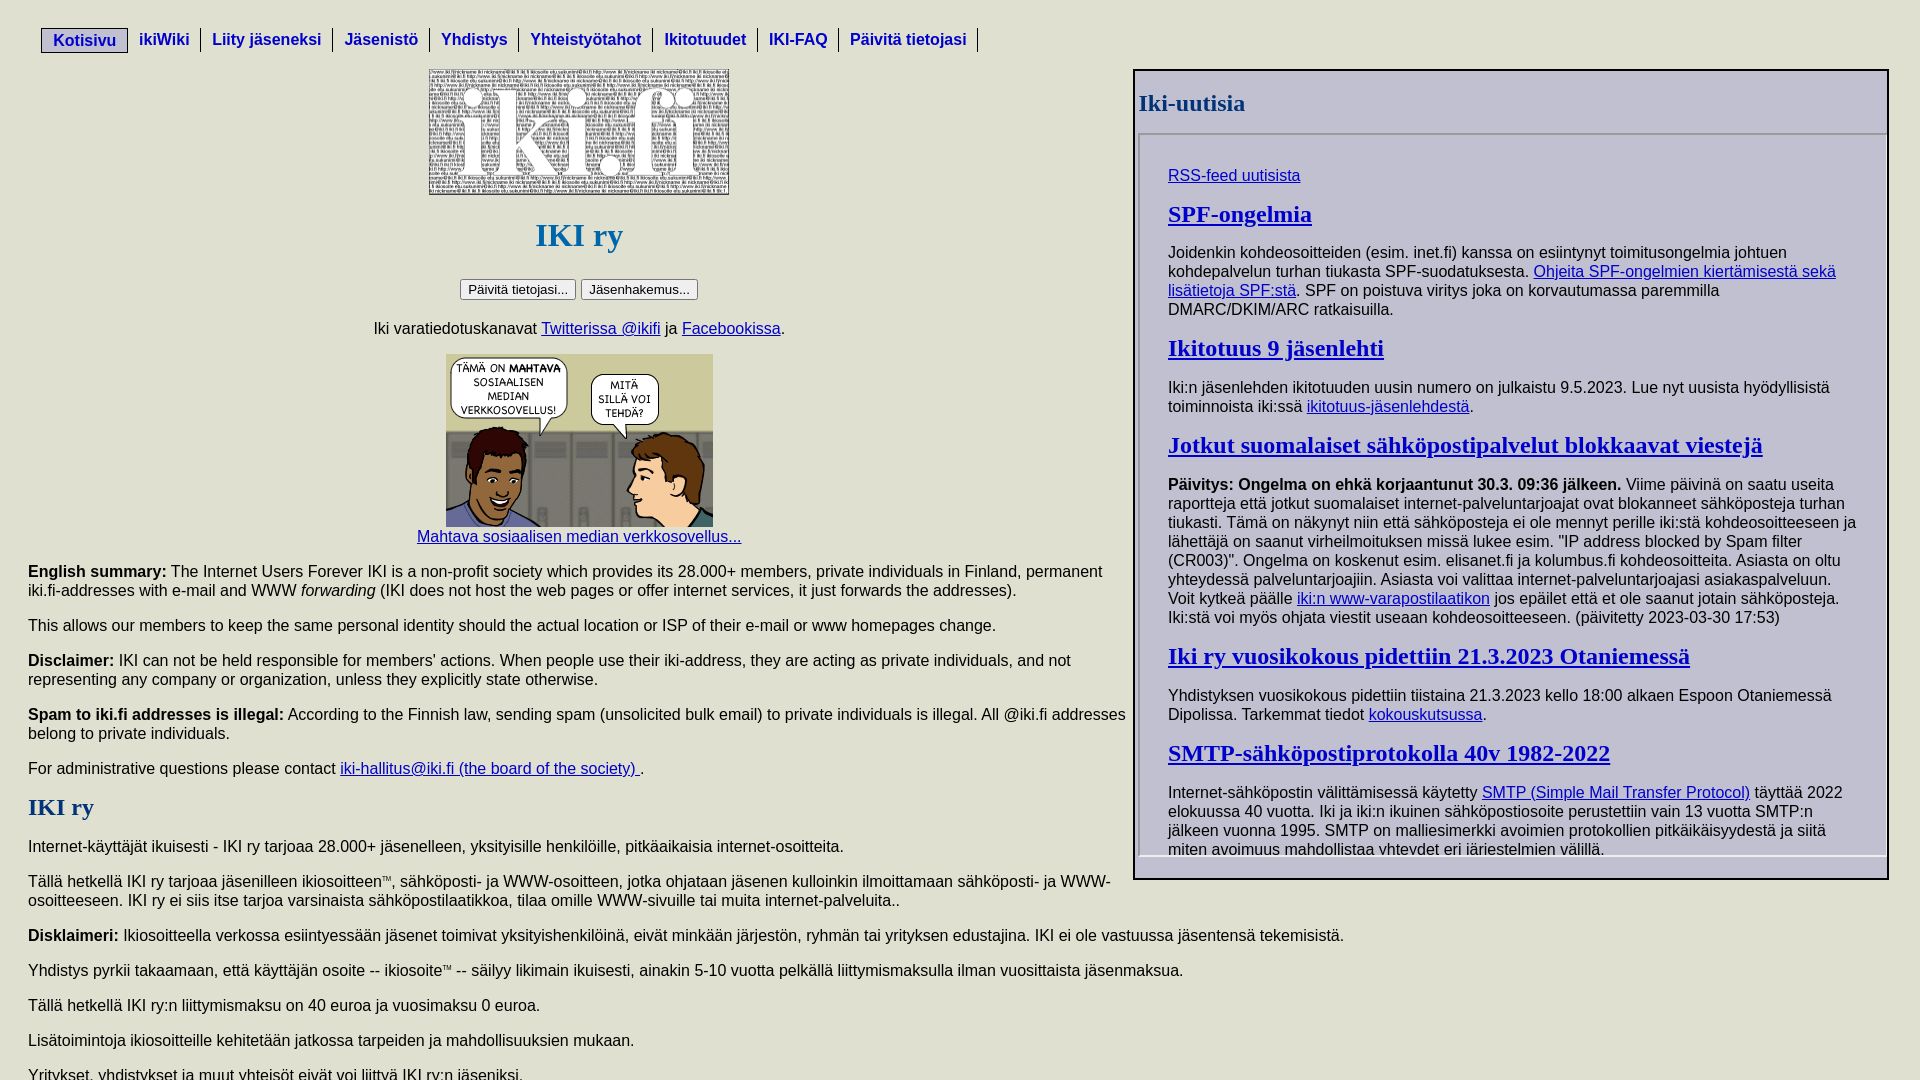 Website status iki.fi is   ONLINE